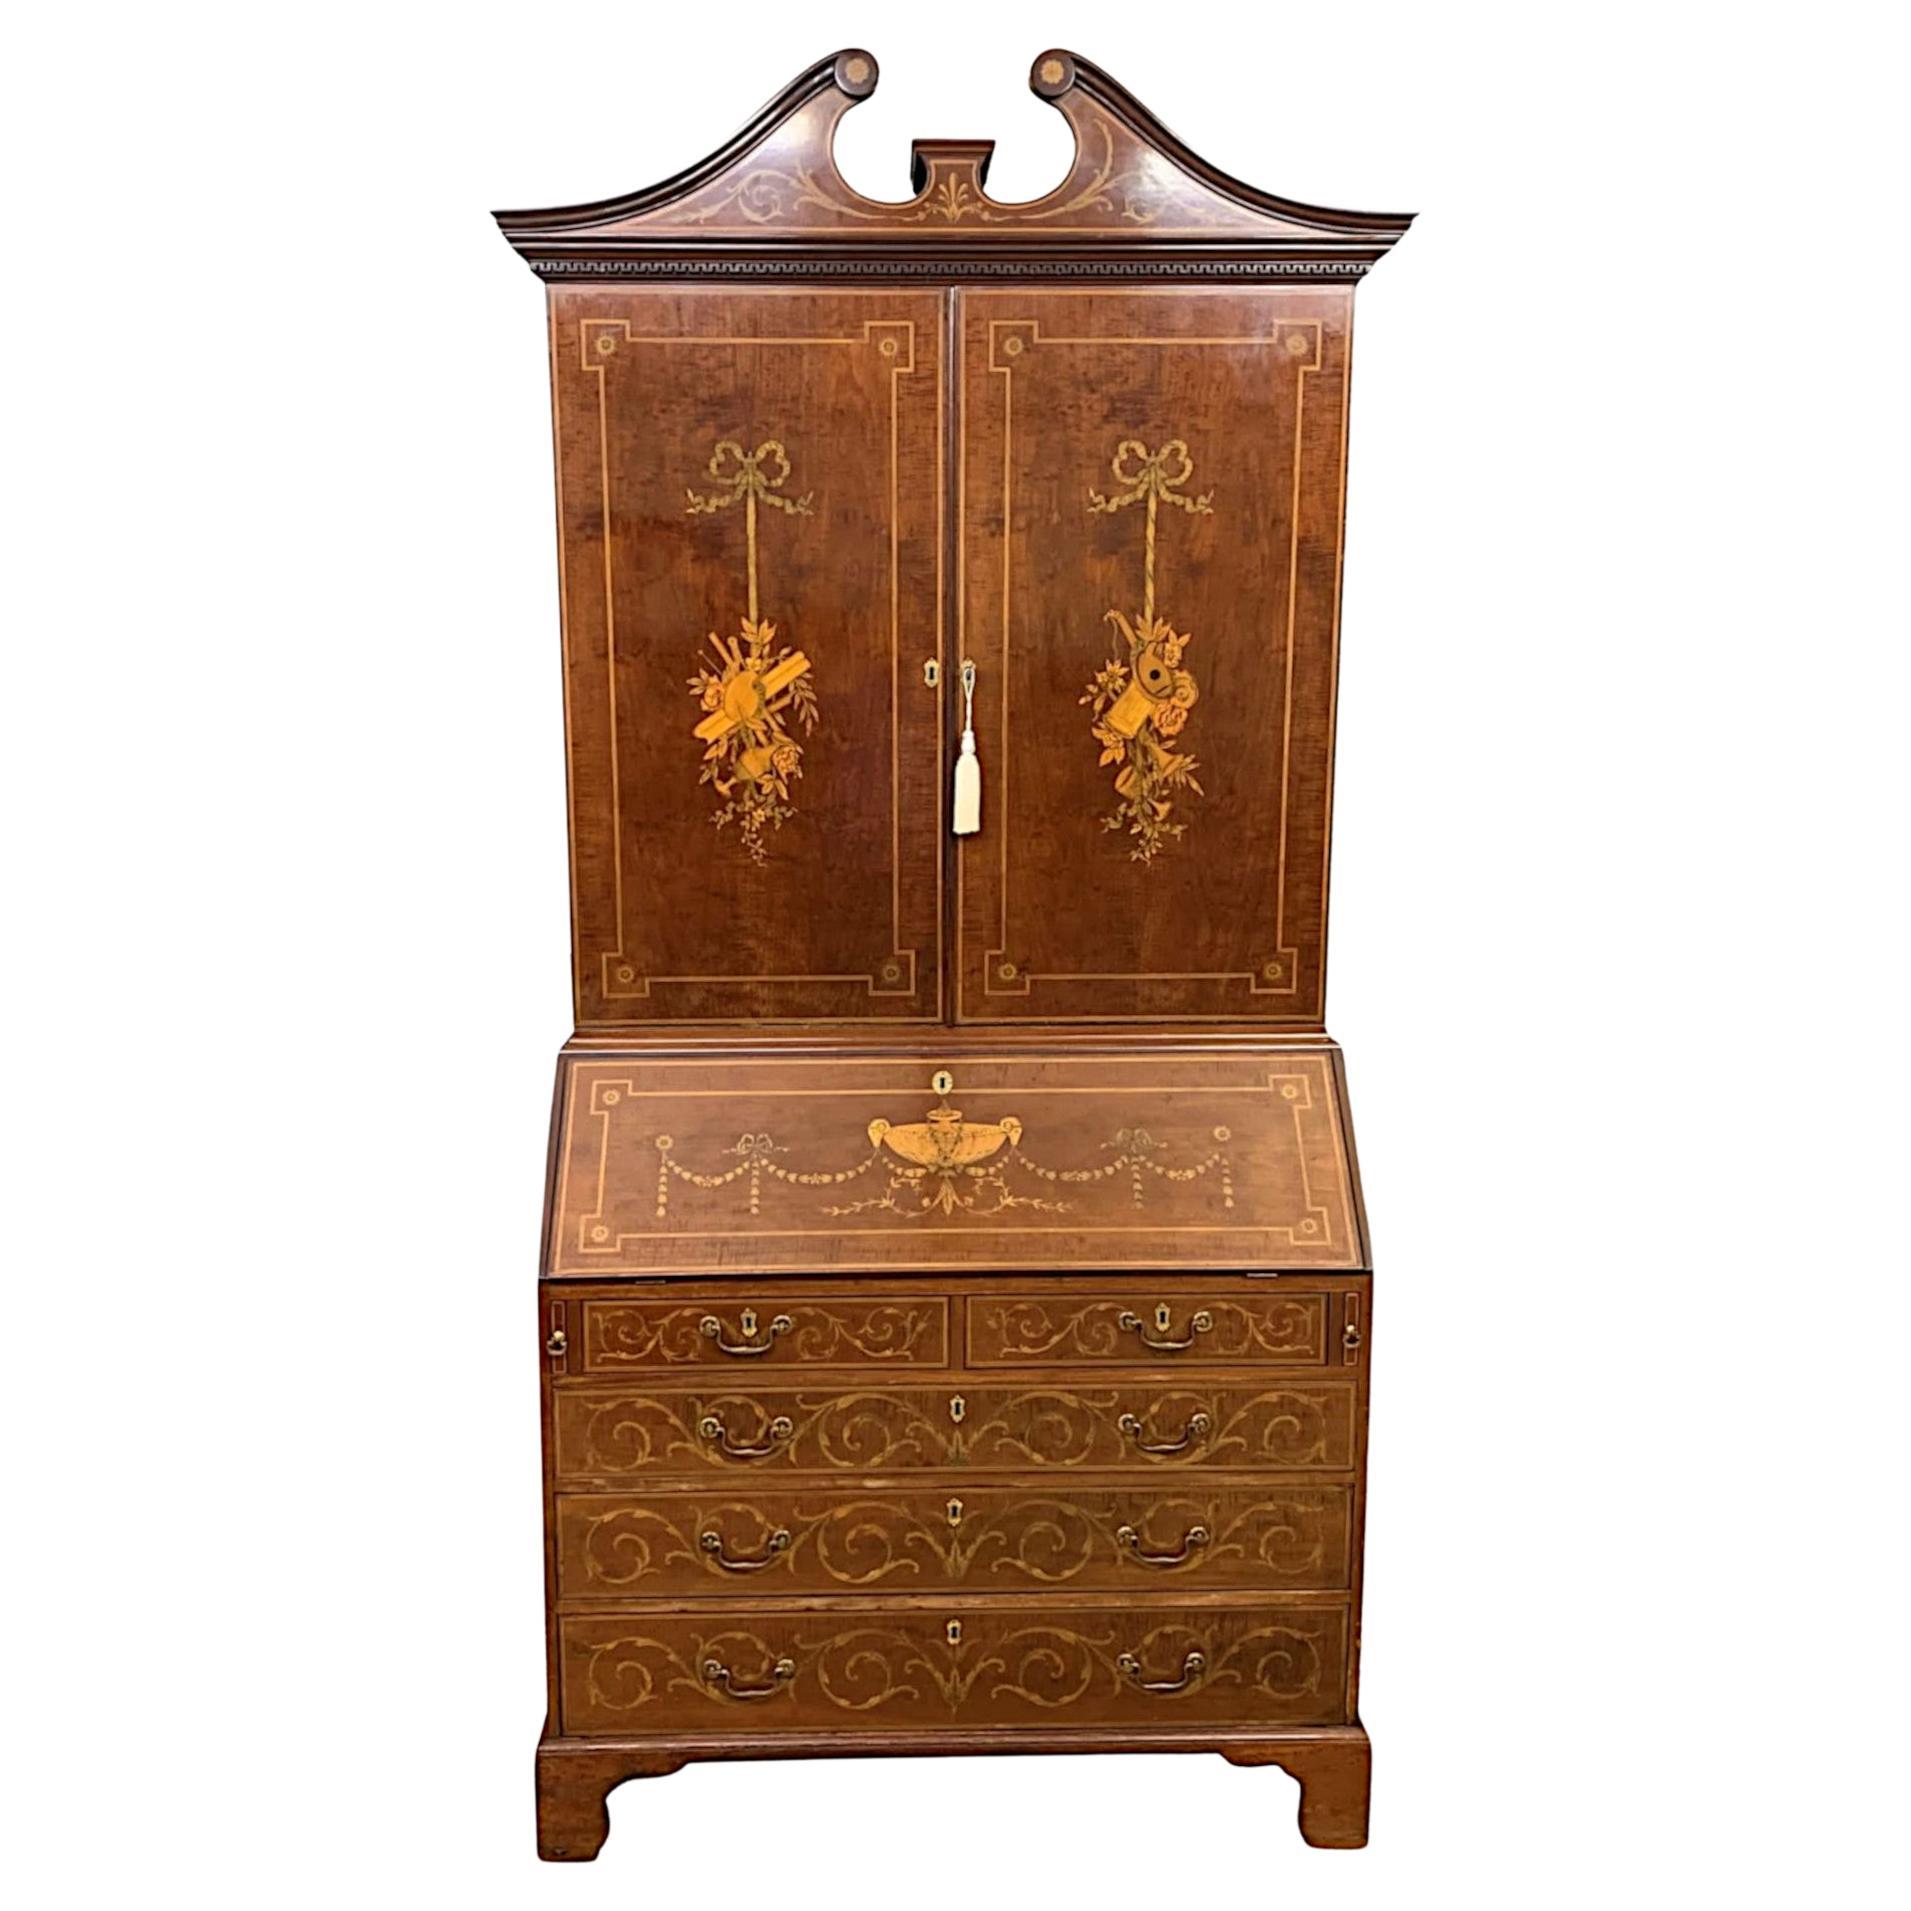 Very Rare and Fine Early 19th Century Georgian Inlaid Bureau Bookcase For Sale